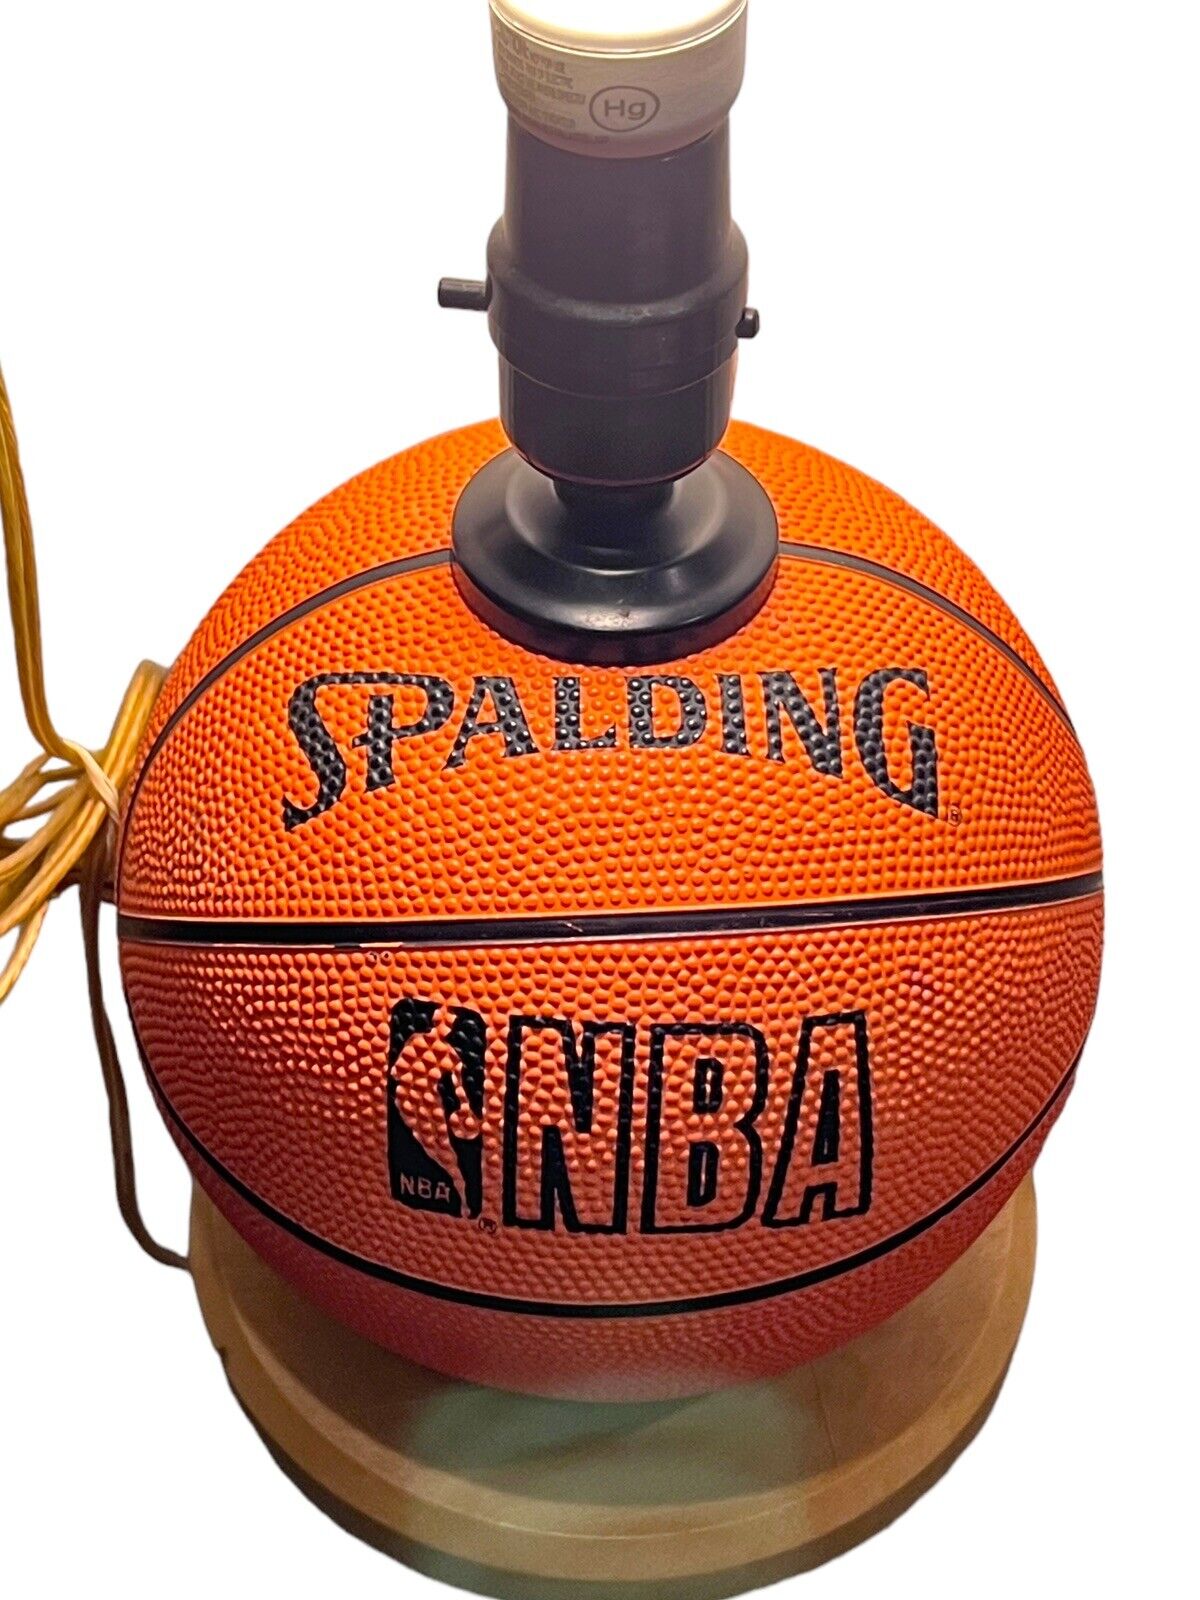 Spalding NBA Basketball Vintage Desk Table Lamp.  Working.